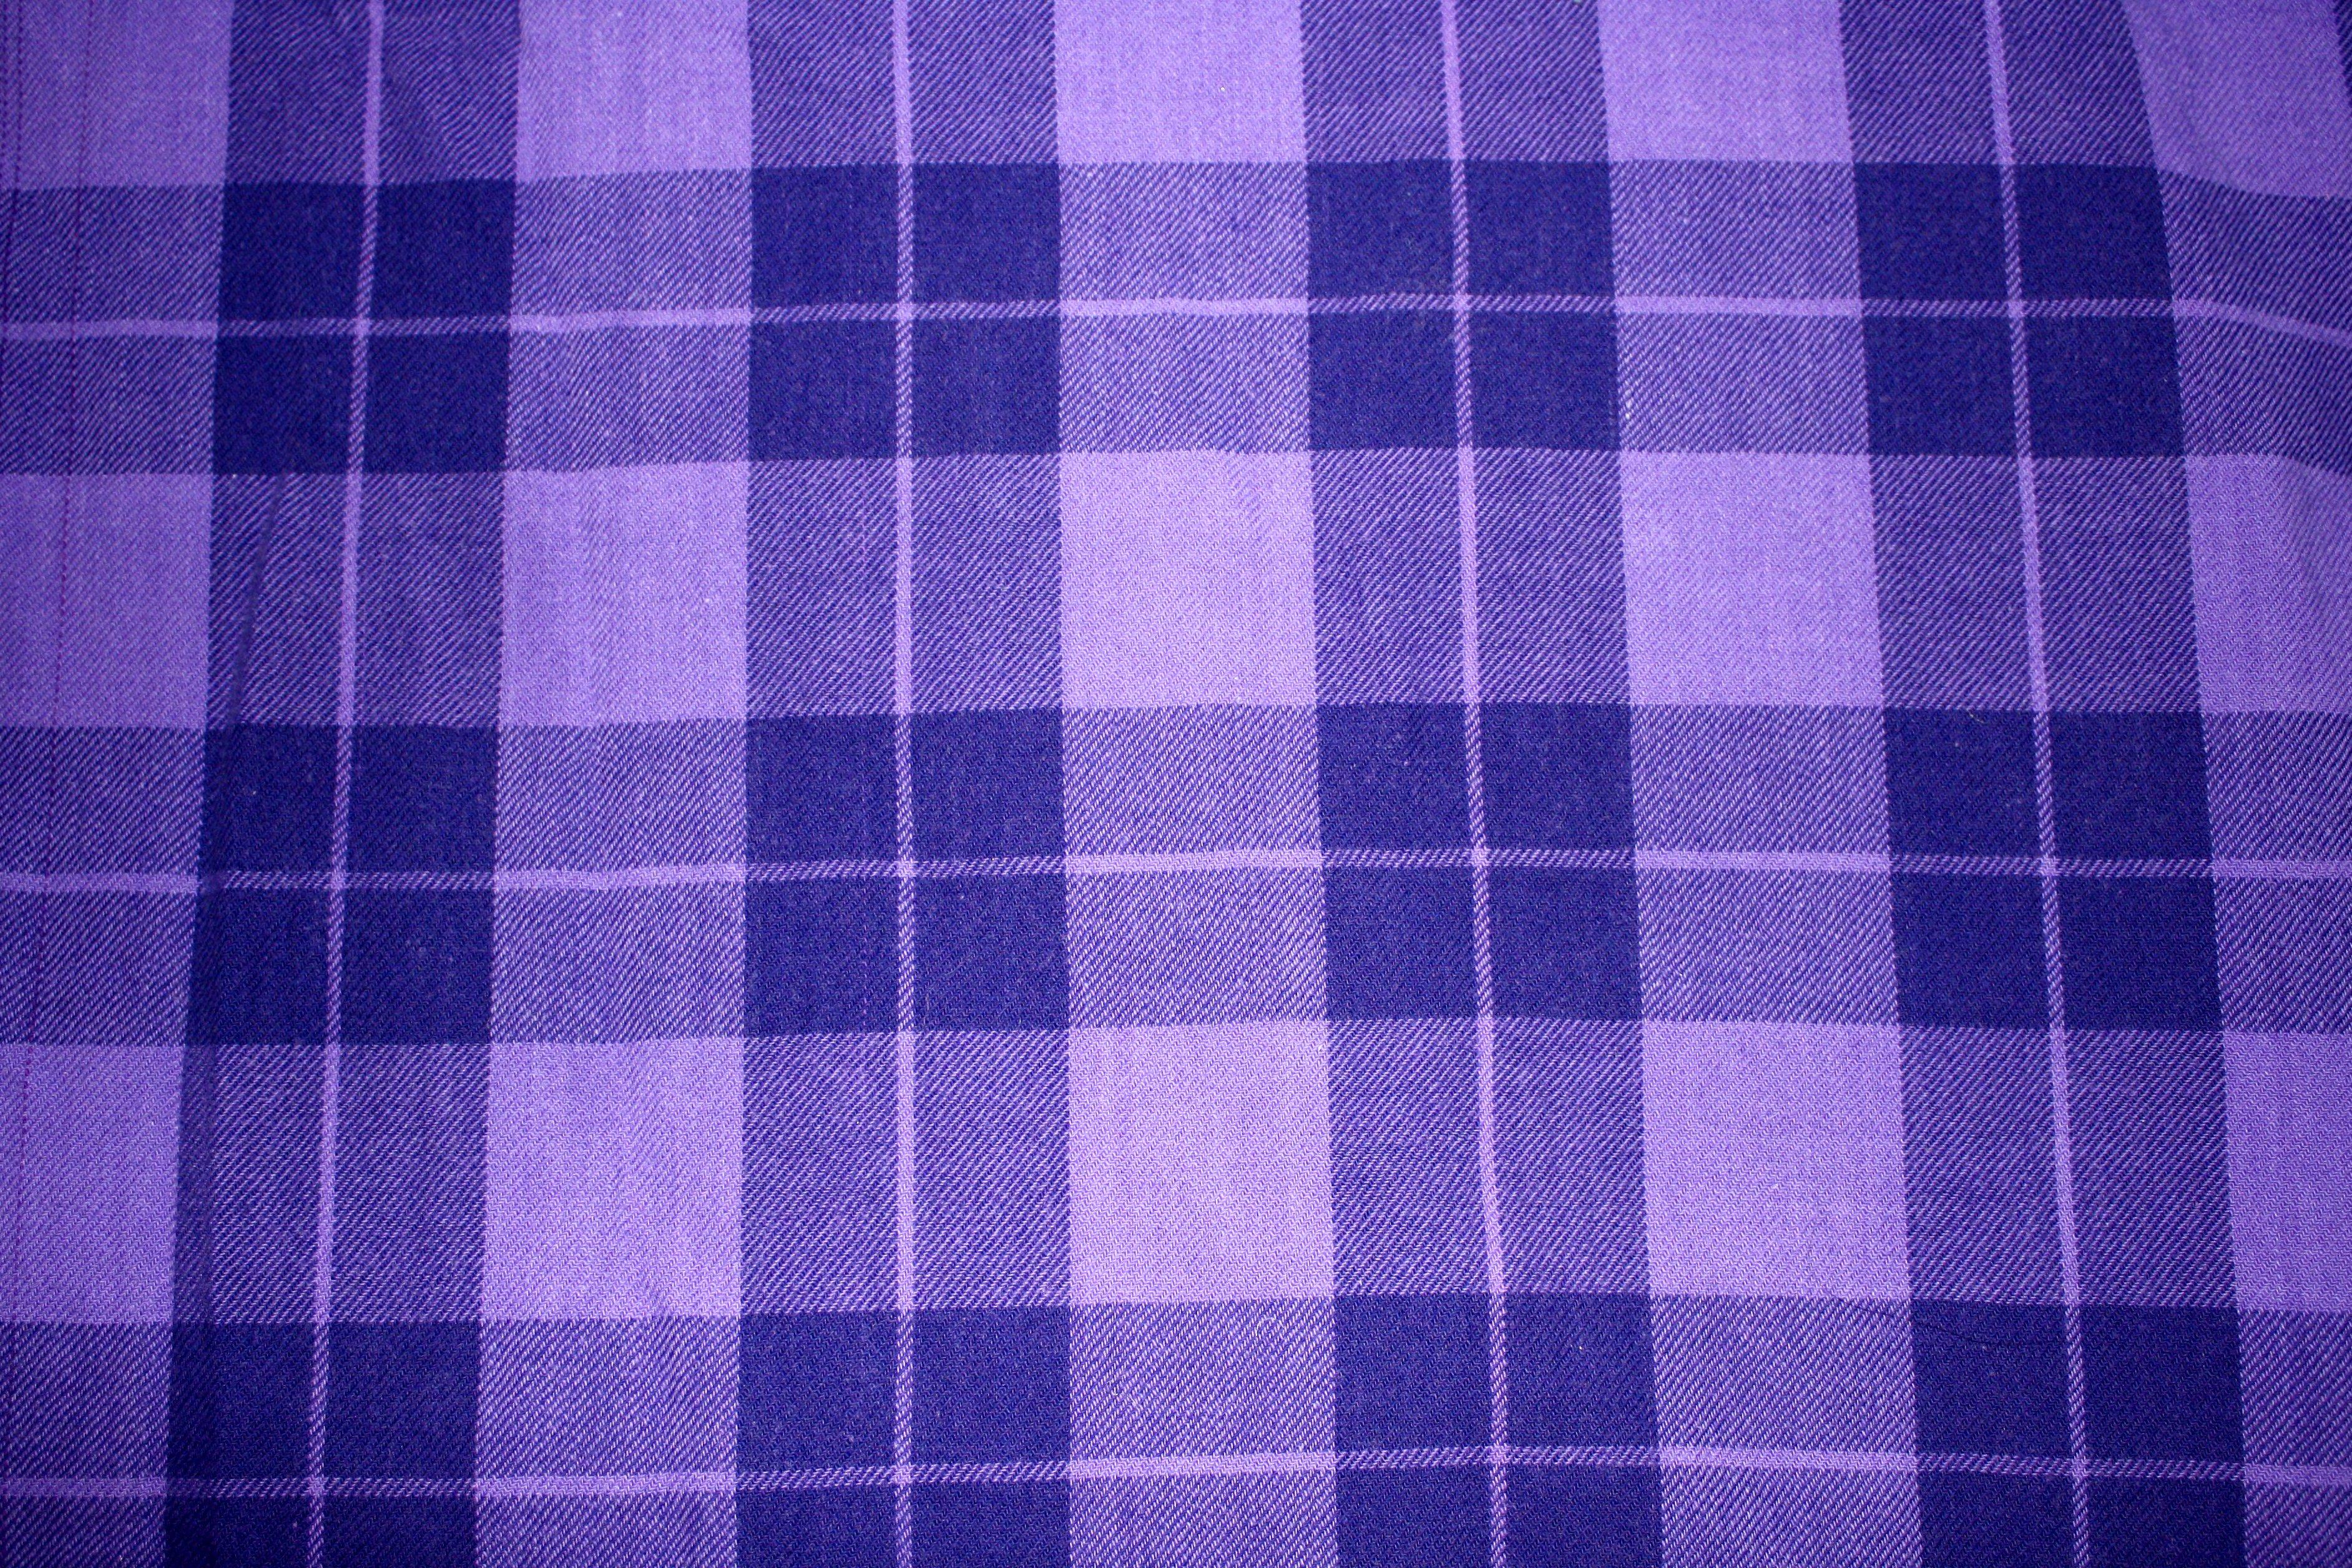 Purple Plaid Fabric Texture Picture. Free Photograph